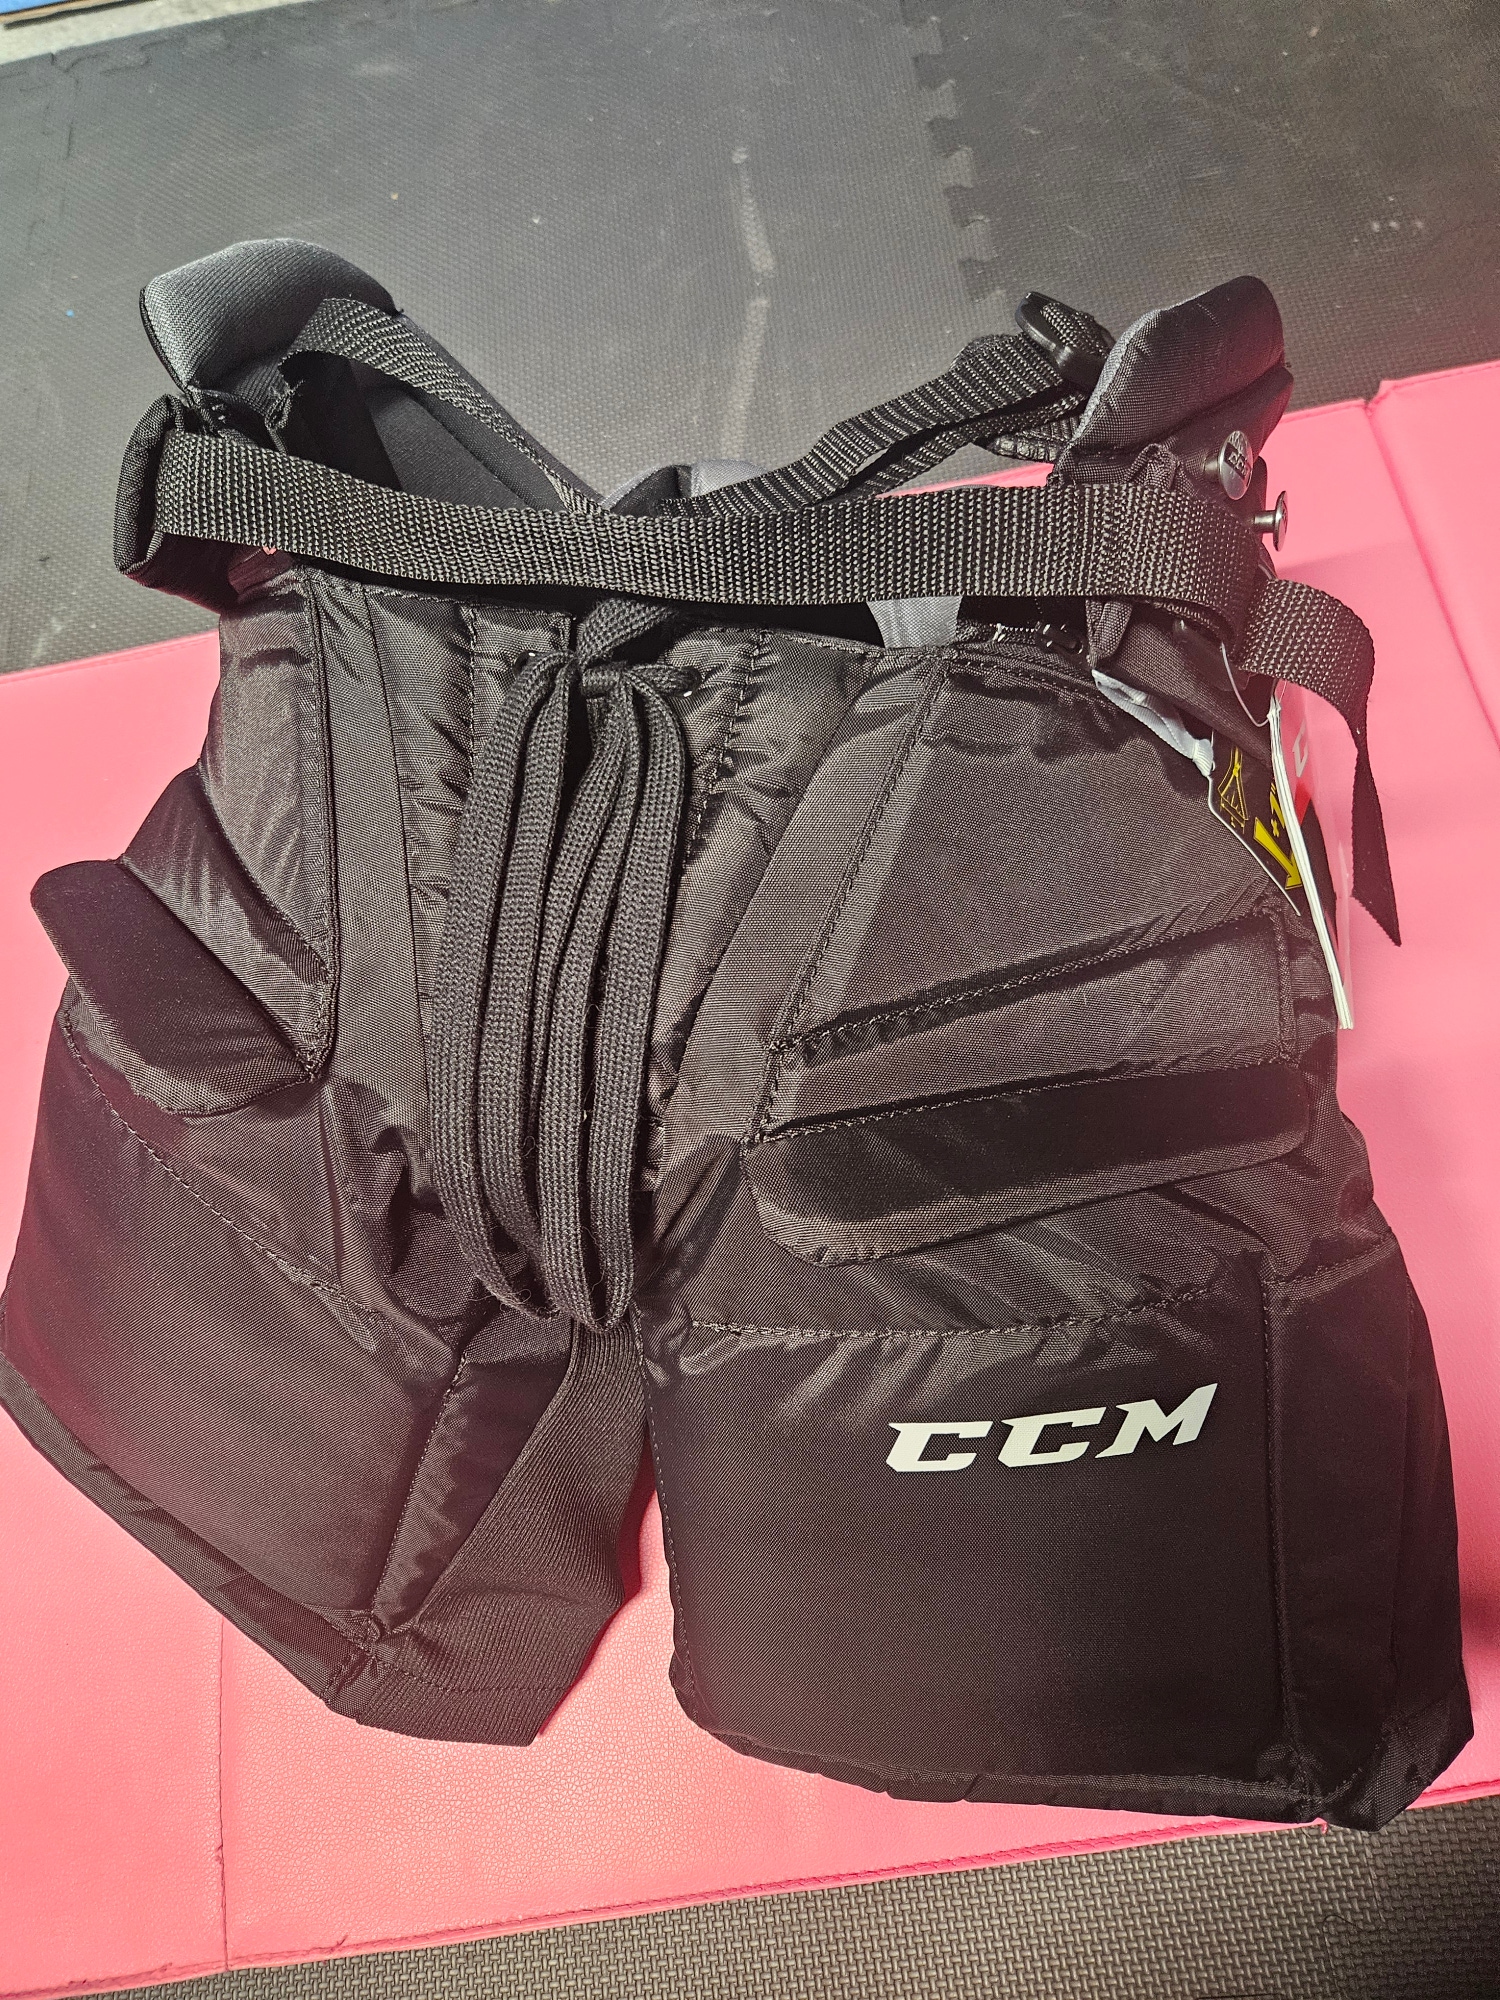 Junior New Medium CCM Premier R1.5 Hockey Goalie Pants